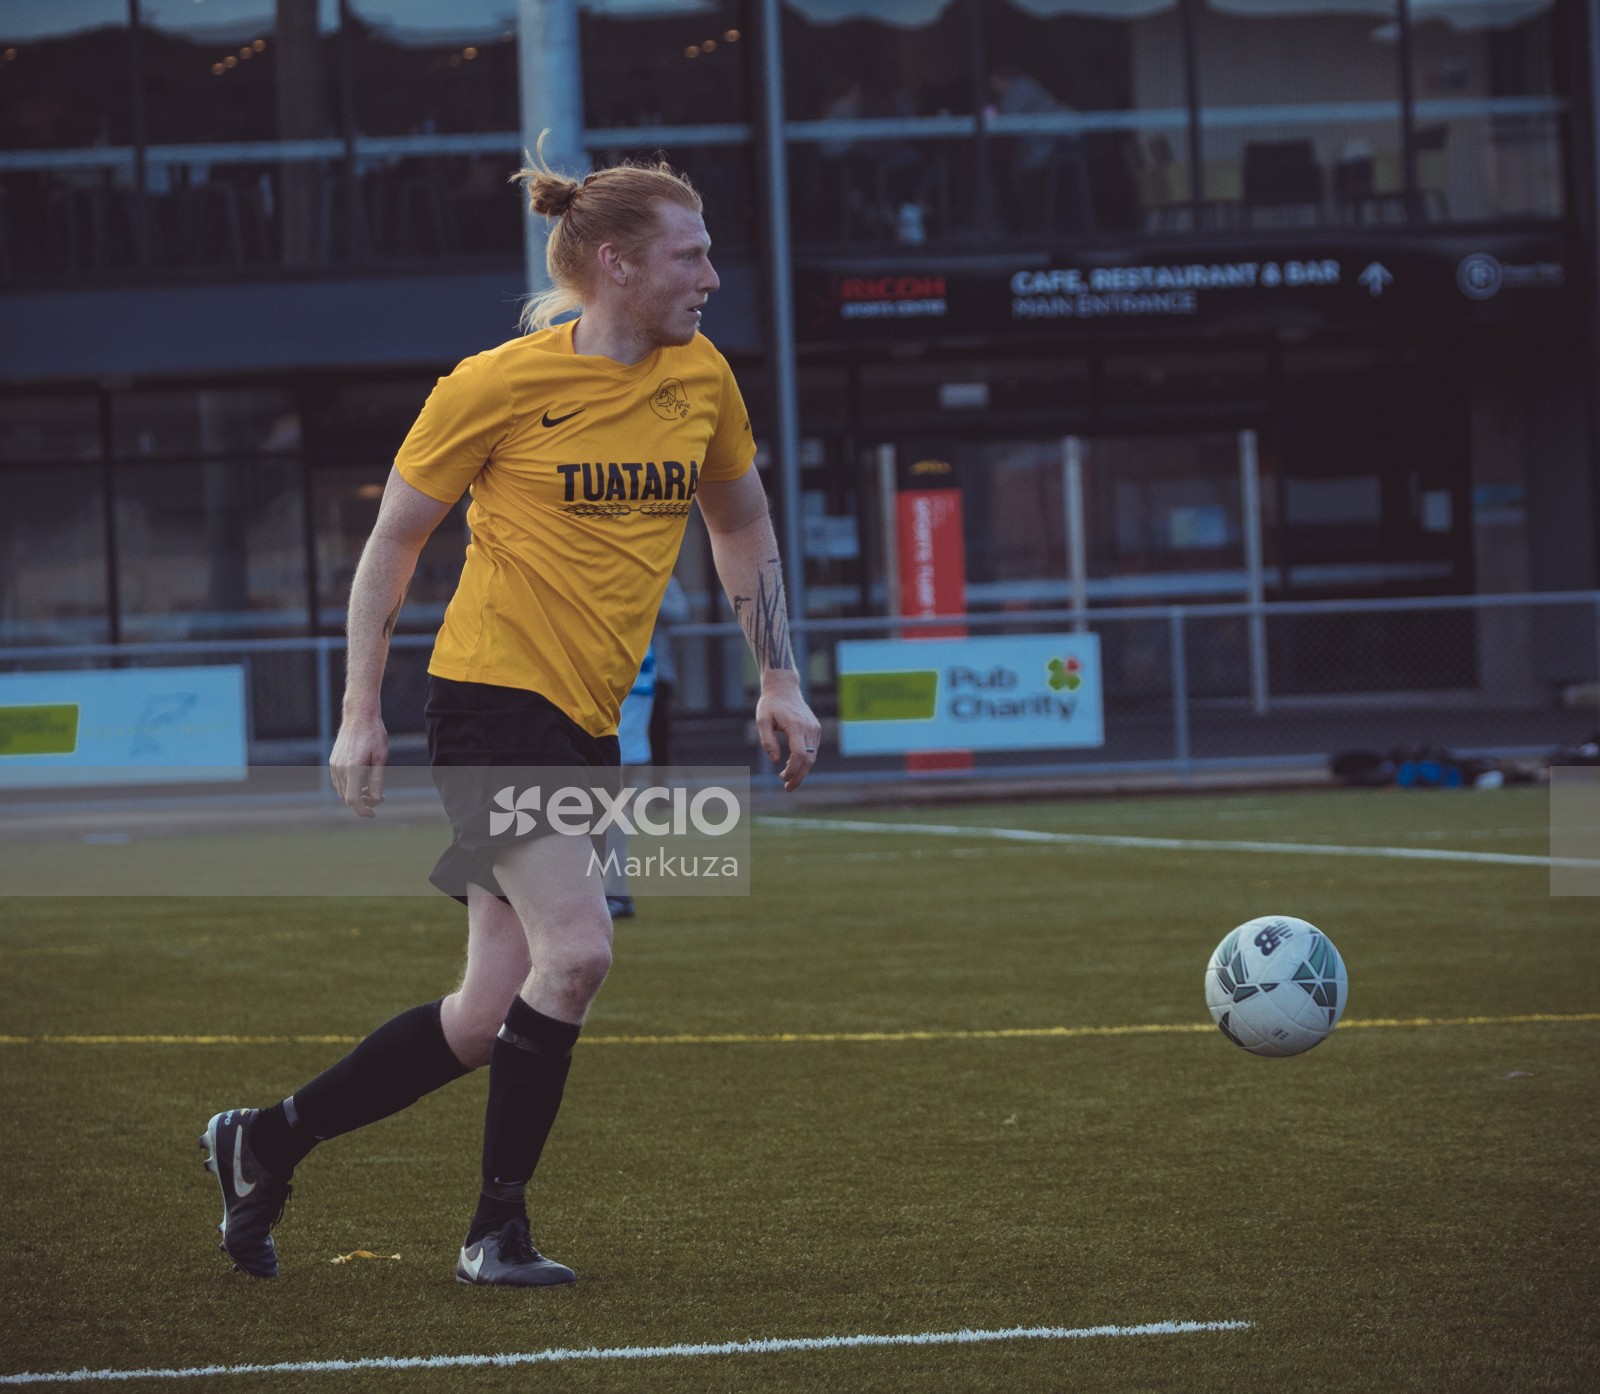 Player in yellow Nike shirt with man bun kicking football - Sports Zone sunday league